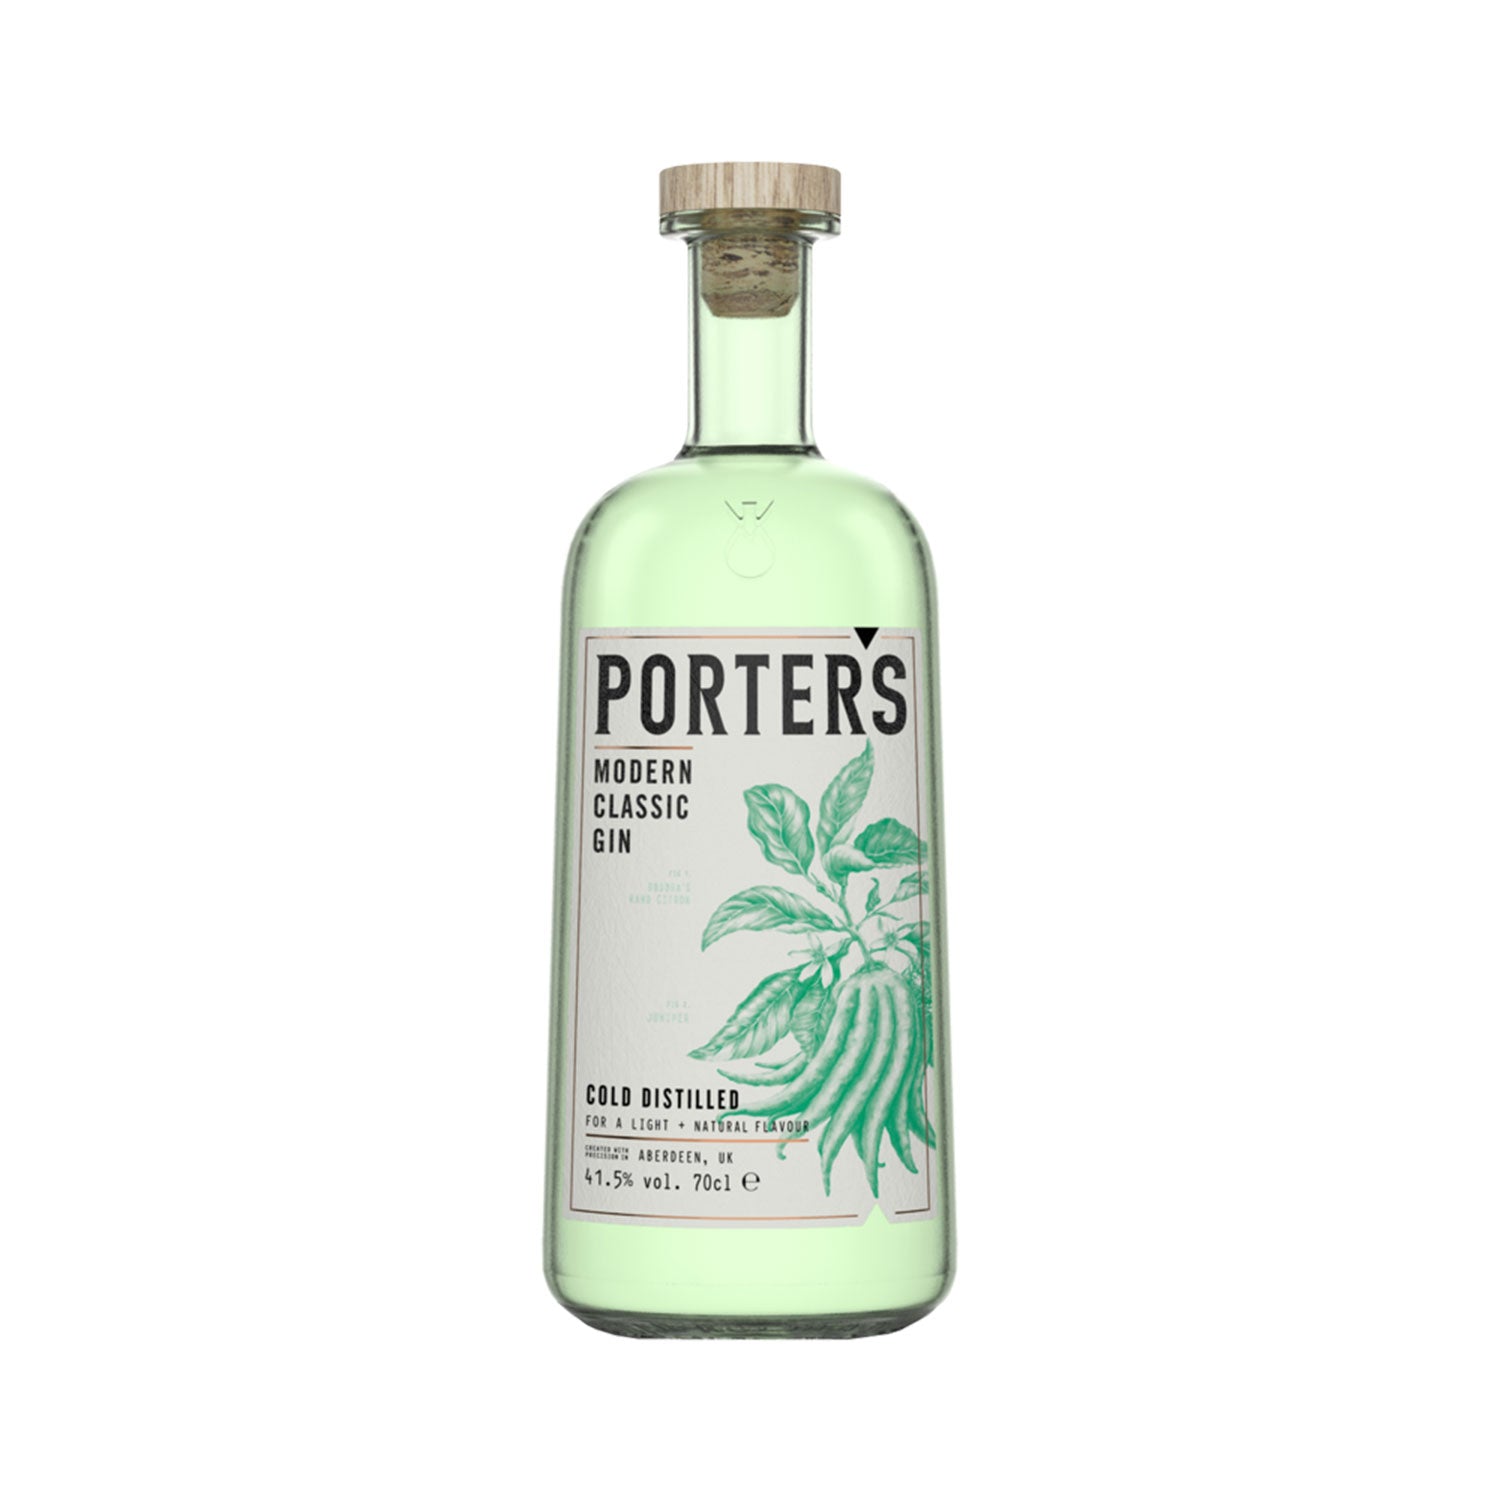 Porters Modern Classic Gin 700ml